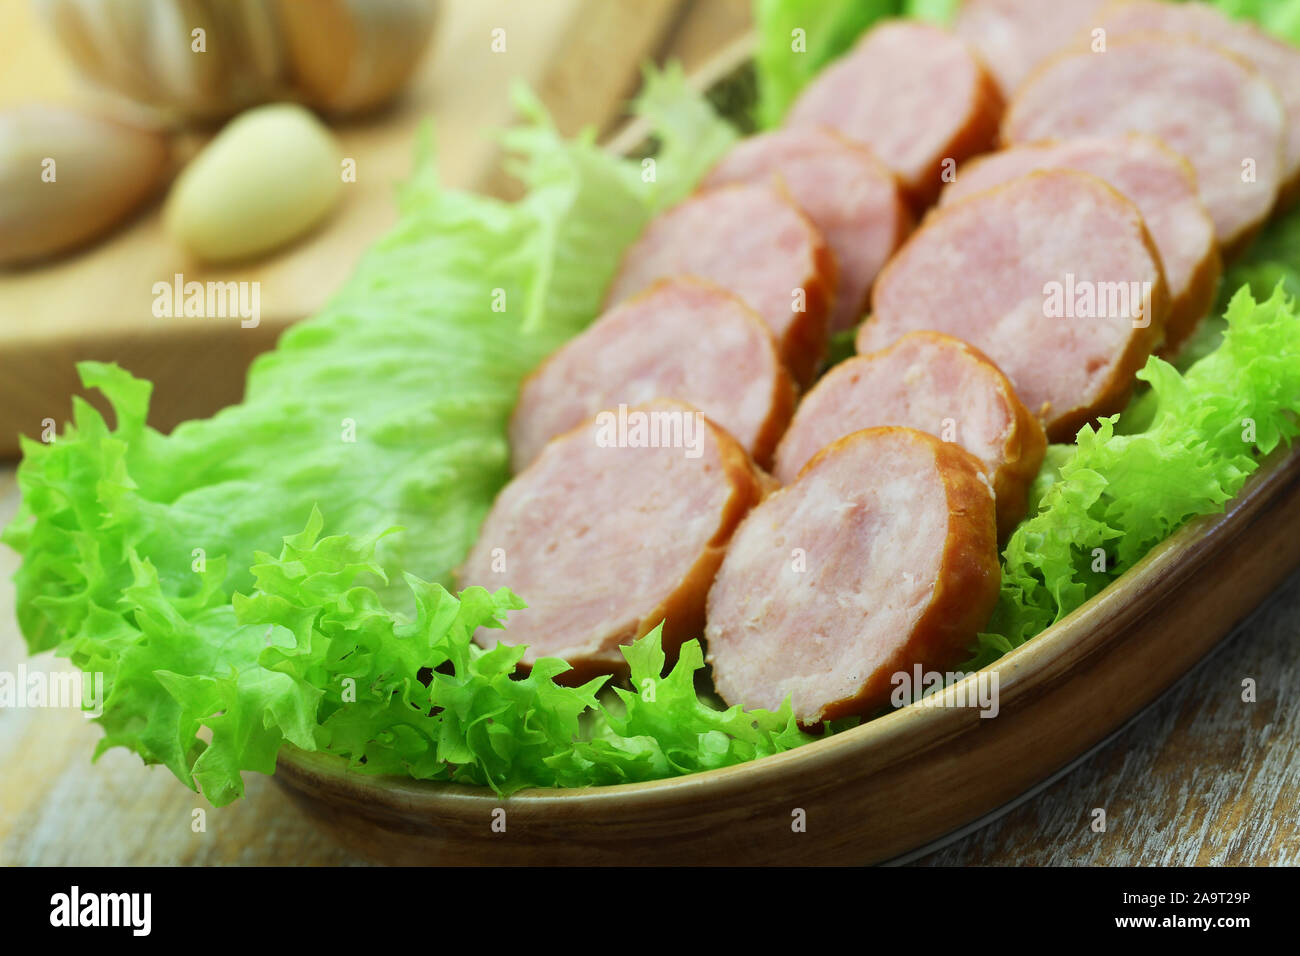 Slices of traditional Polish pork sausage on lettuce, closeup Stock Photo